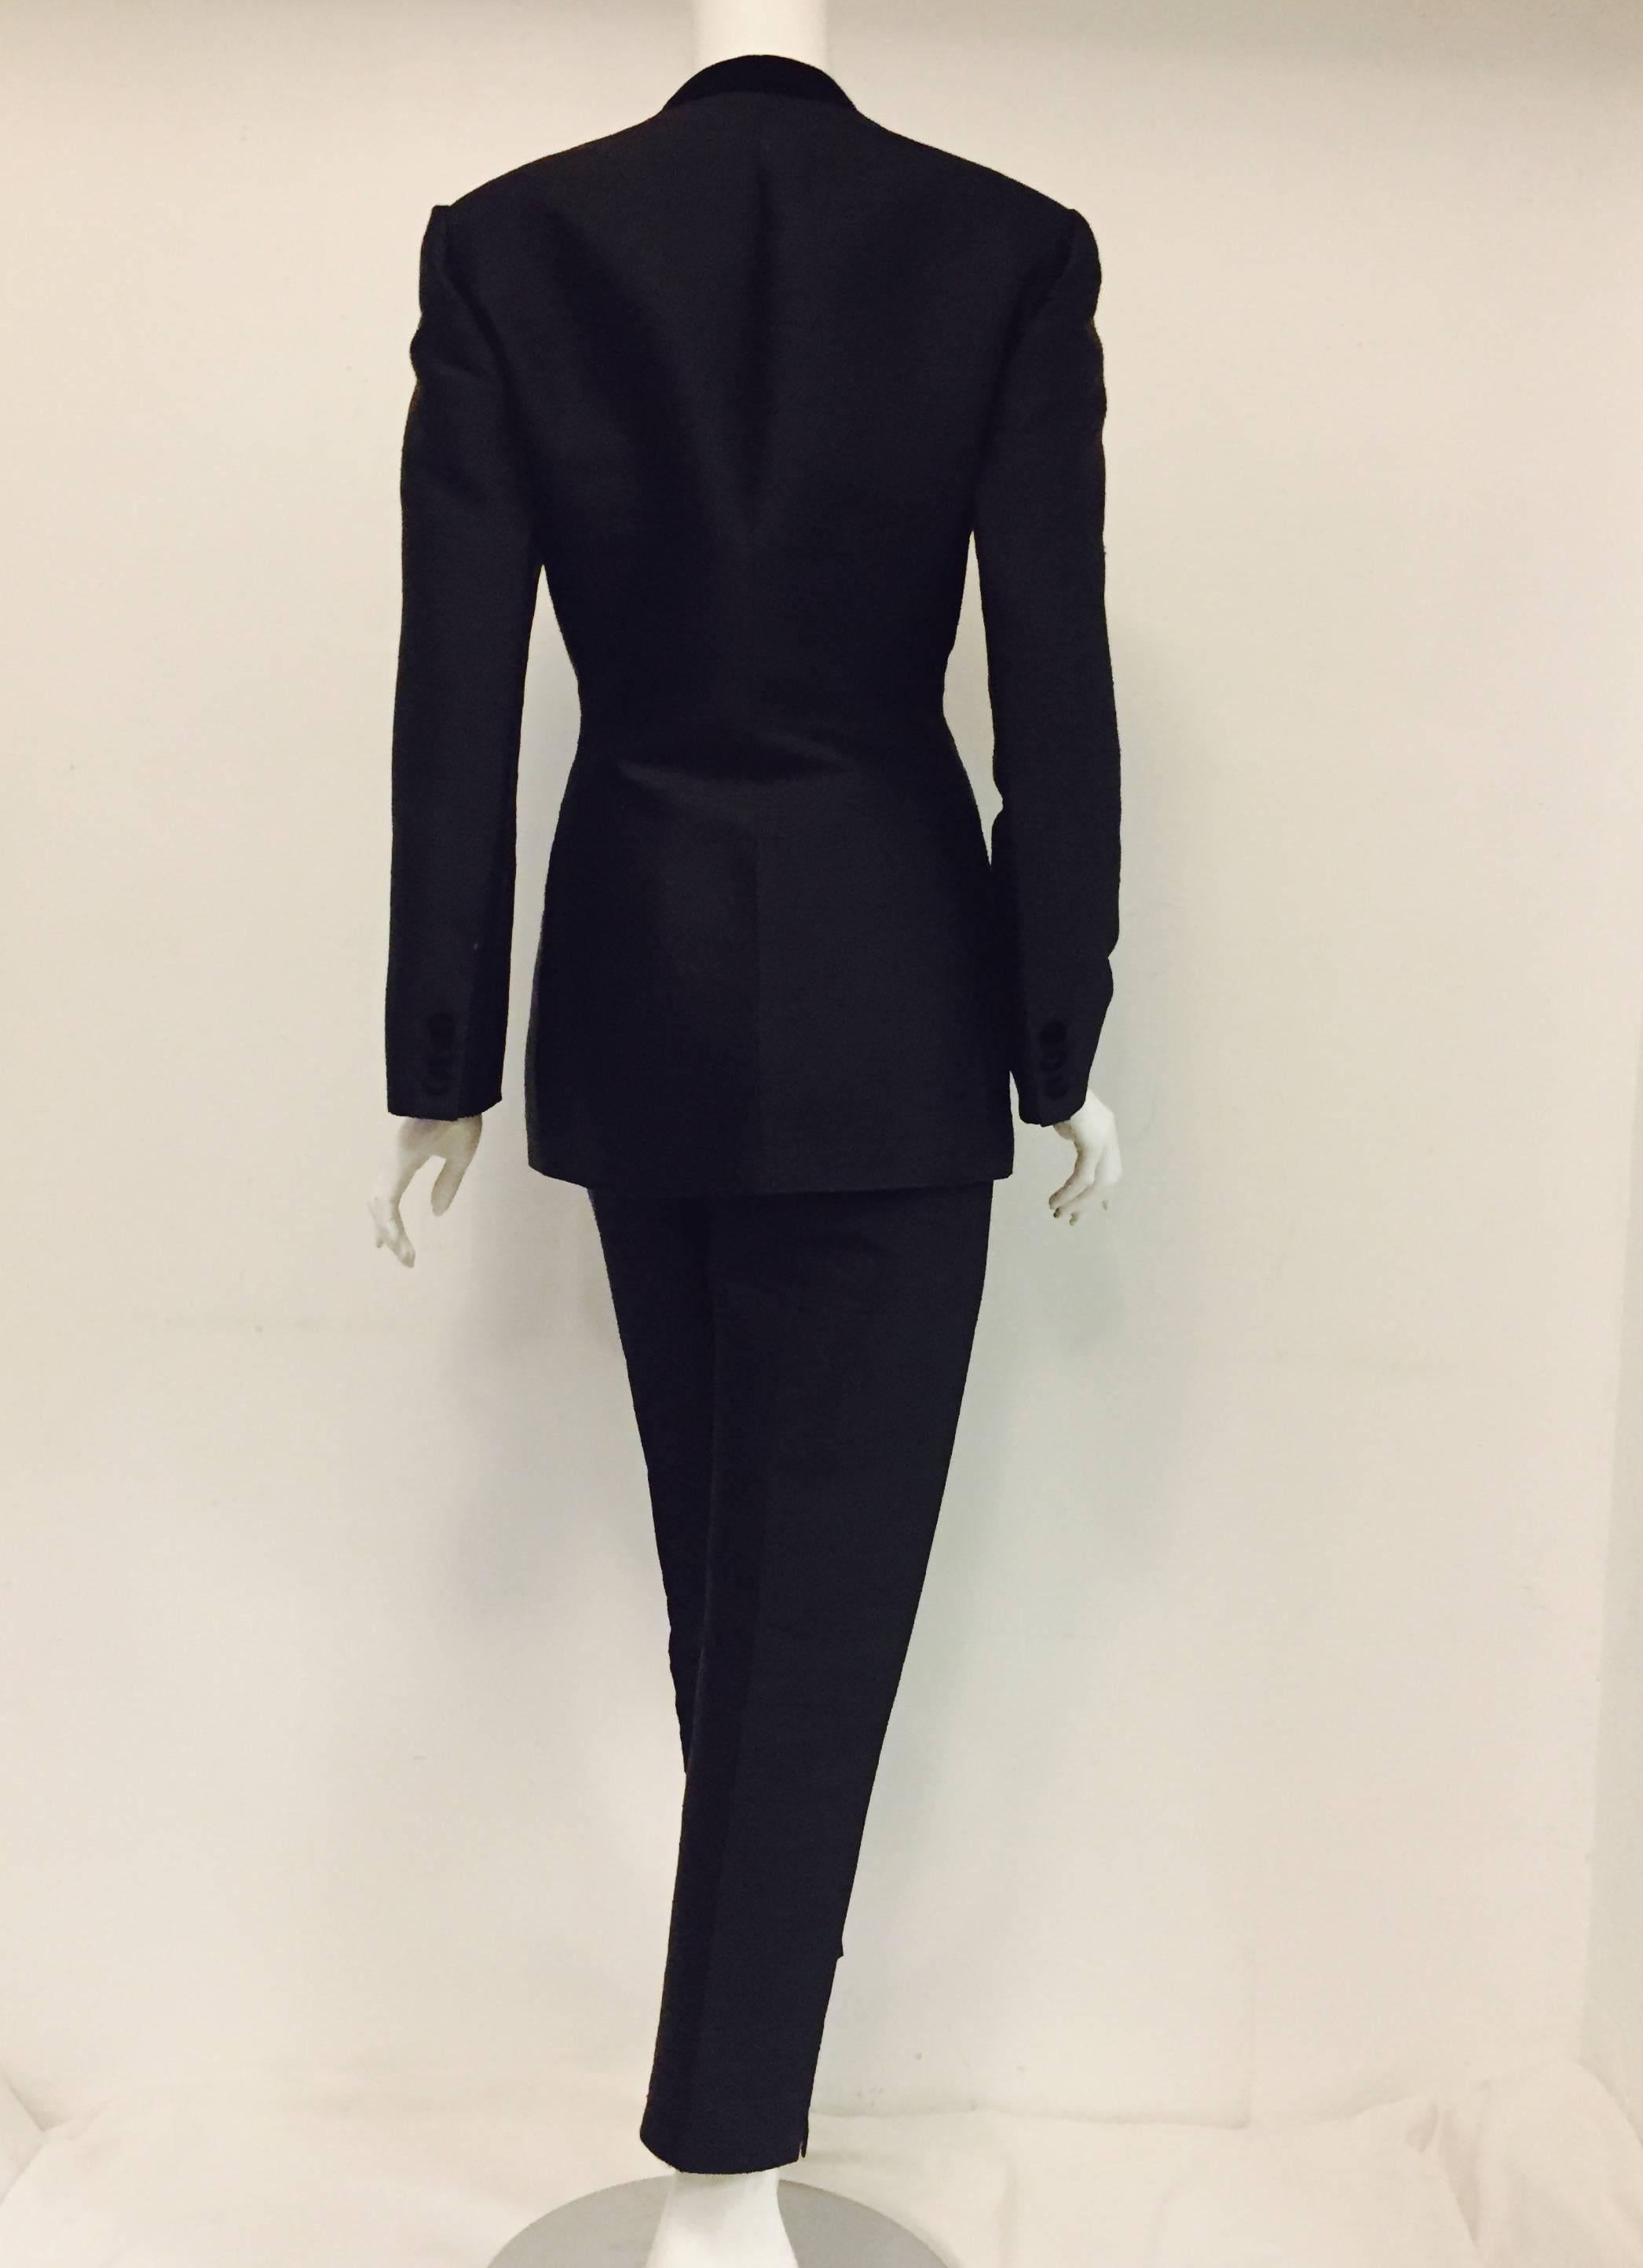  Outstanding Oscar de la Renta's Detailed Black Silk Pant Suit with Velvet Trim  In Excellent Condition For Sale In Palm Beach, FL